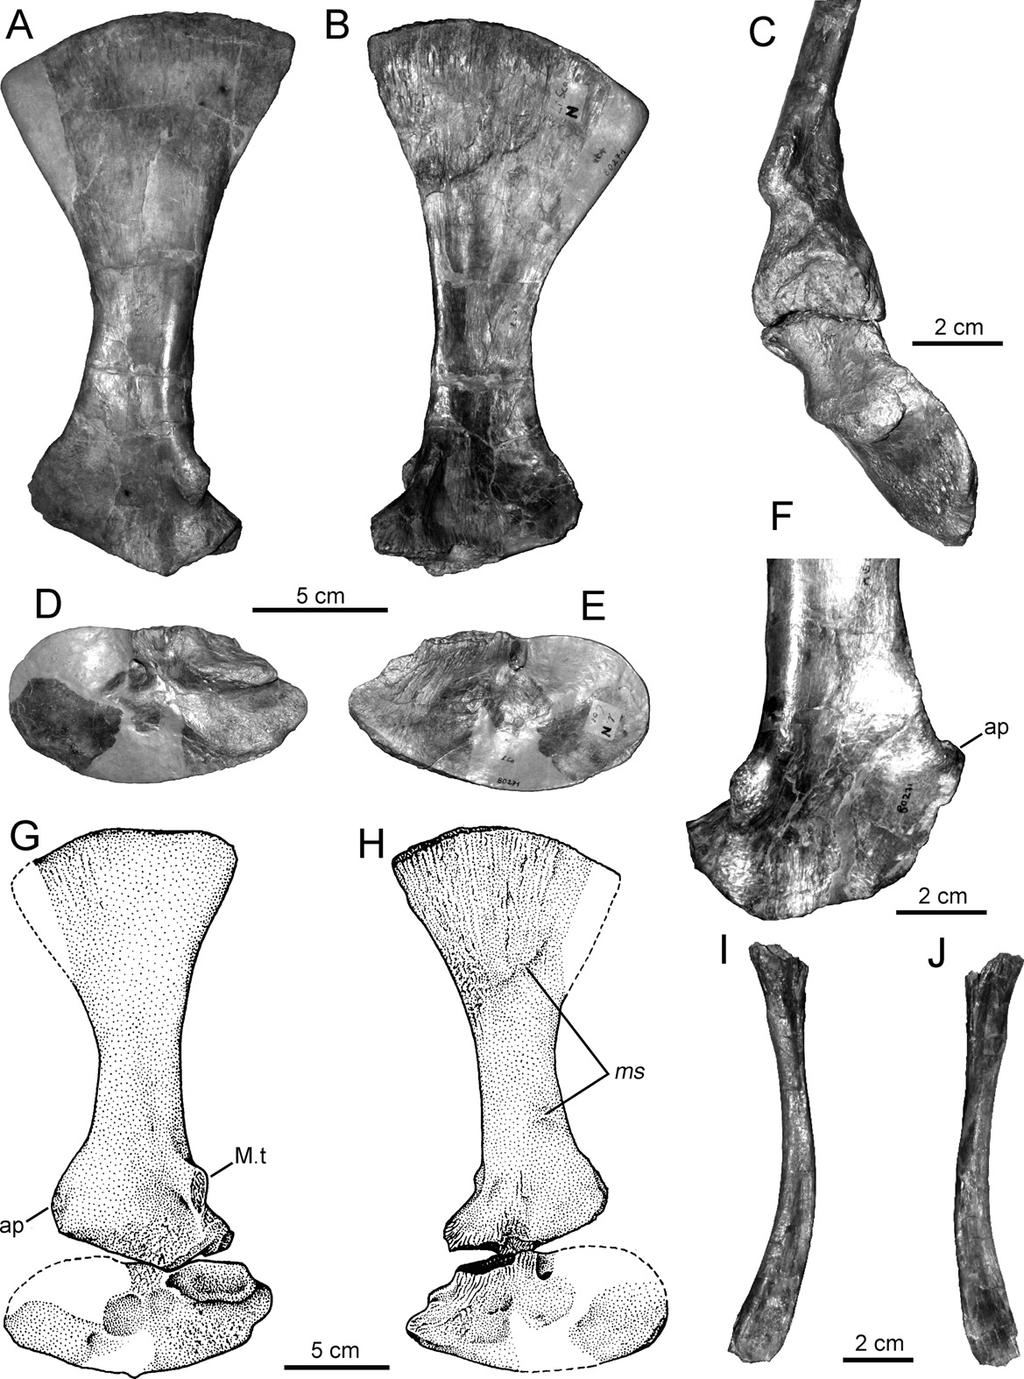 110 JOURNAL OF VERTEBRATE PALEONTOLOGY, VOL. 29, NO. 1, 2009 FIGURE 3. Pectoral girdle of Batrachotomus kupferzellensis. A, B, Lateral, medial views of left scapula.